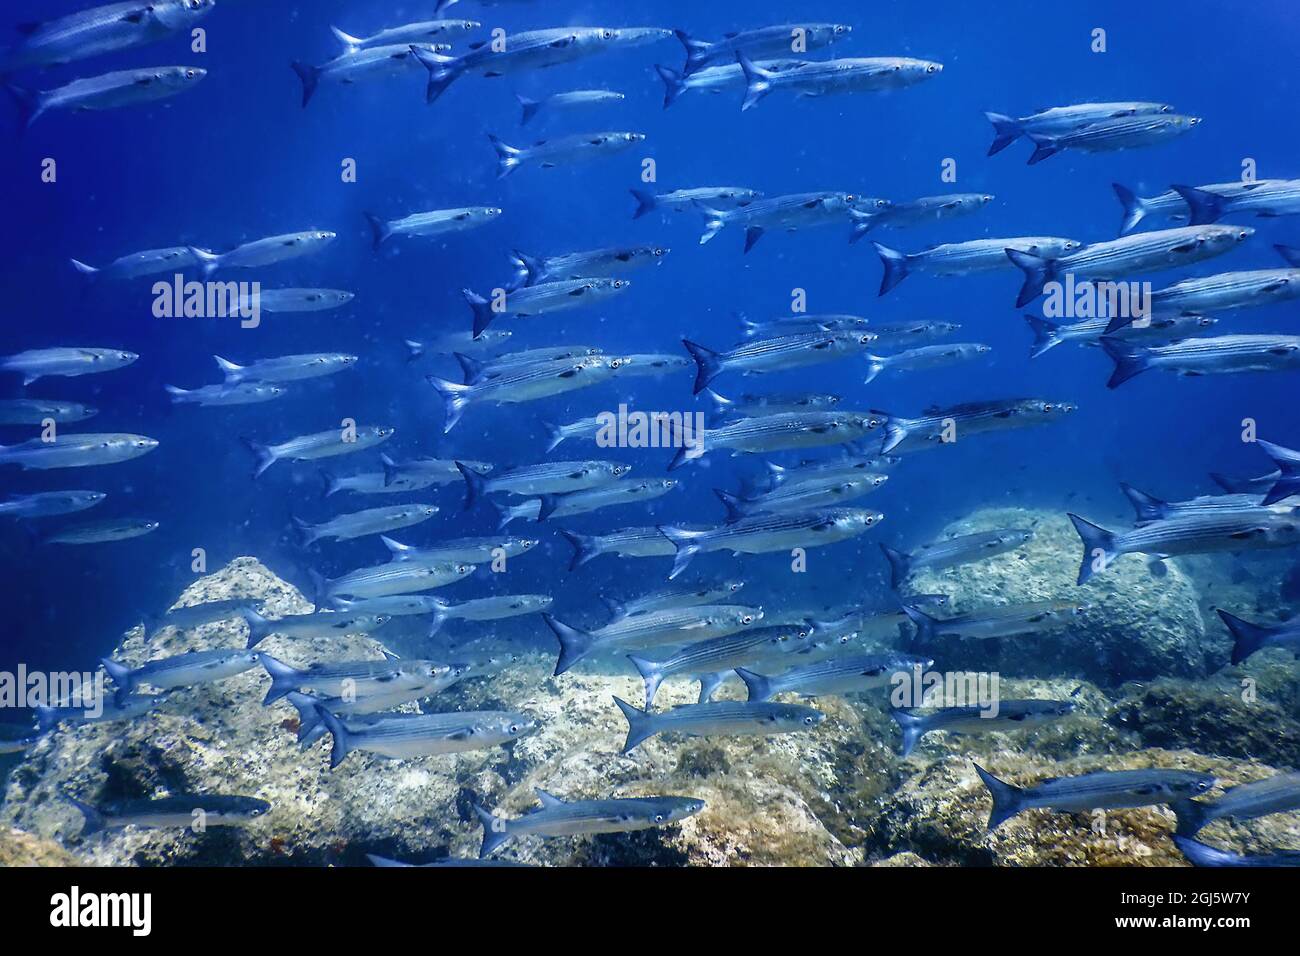 Fish School Underwater, Fish underwater background (Mugil cephalus) Flathead grey mullet Stock Photo